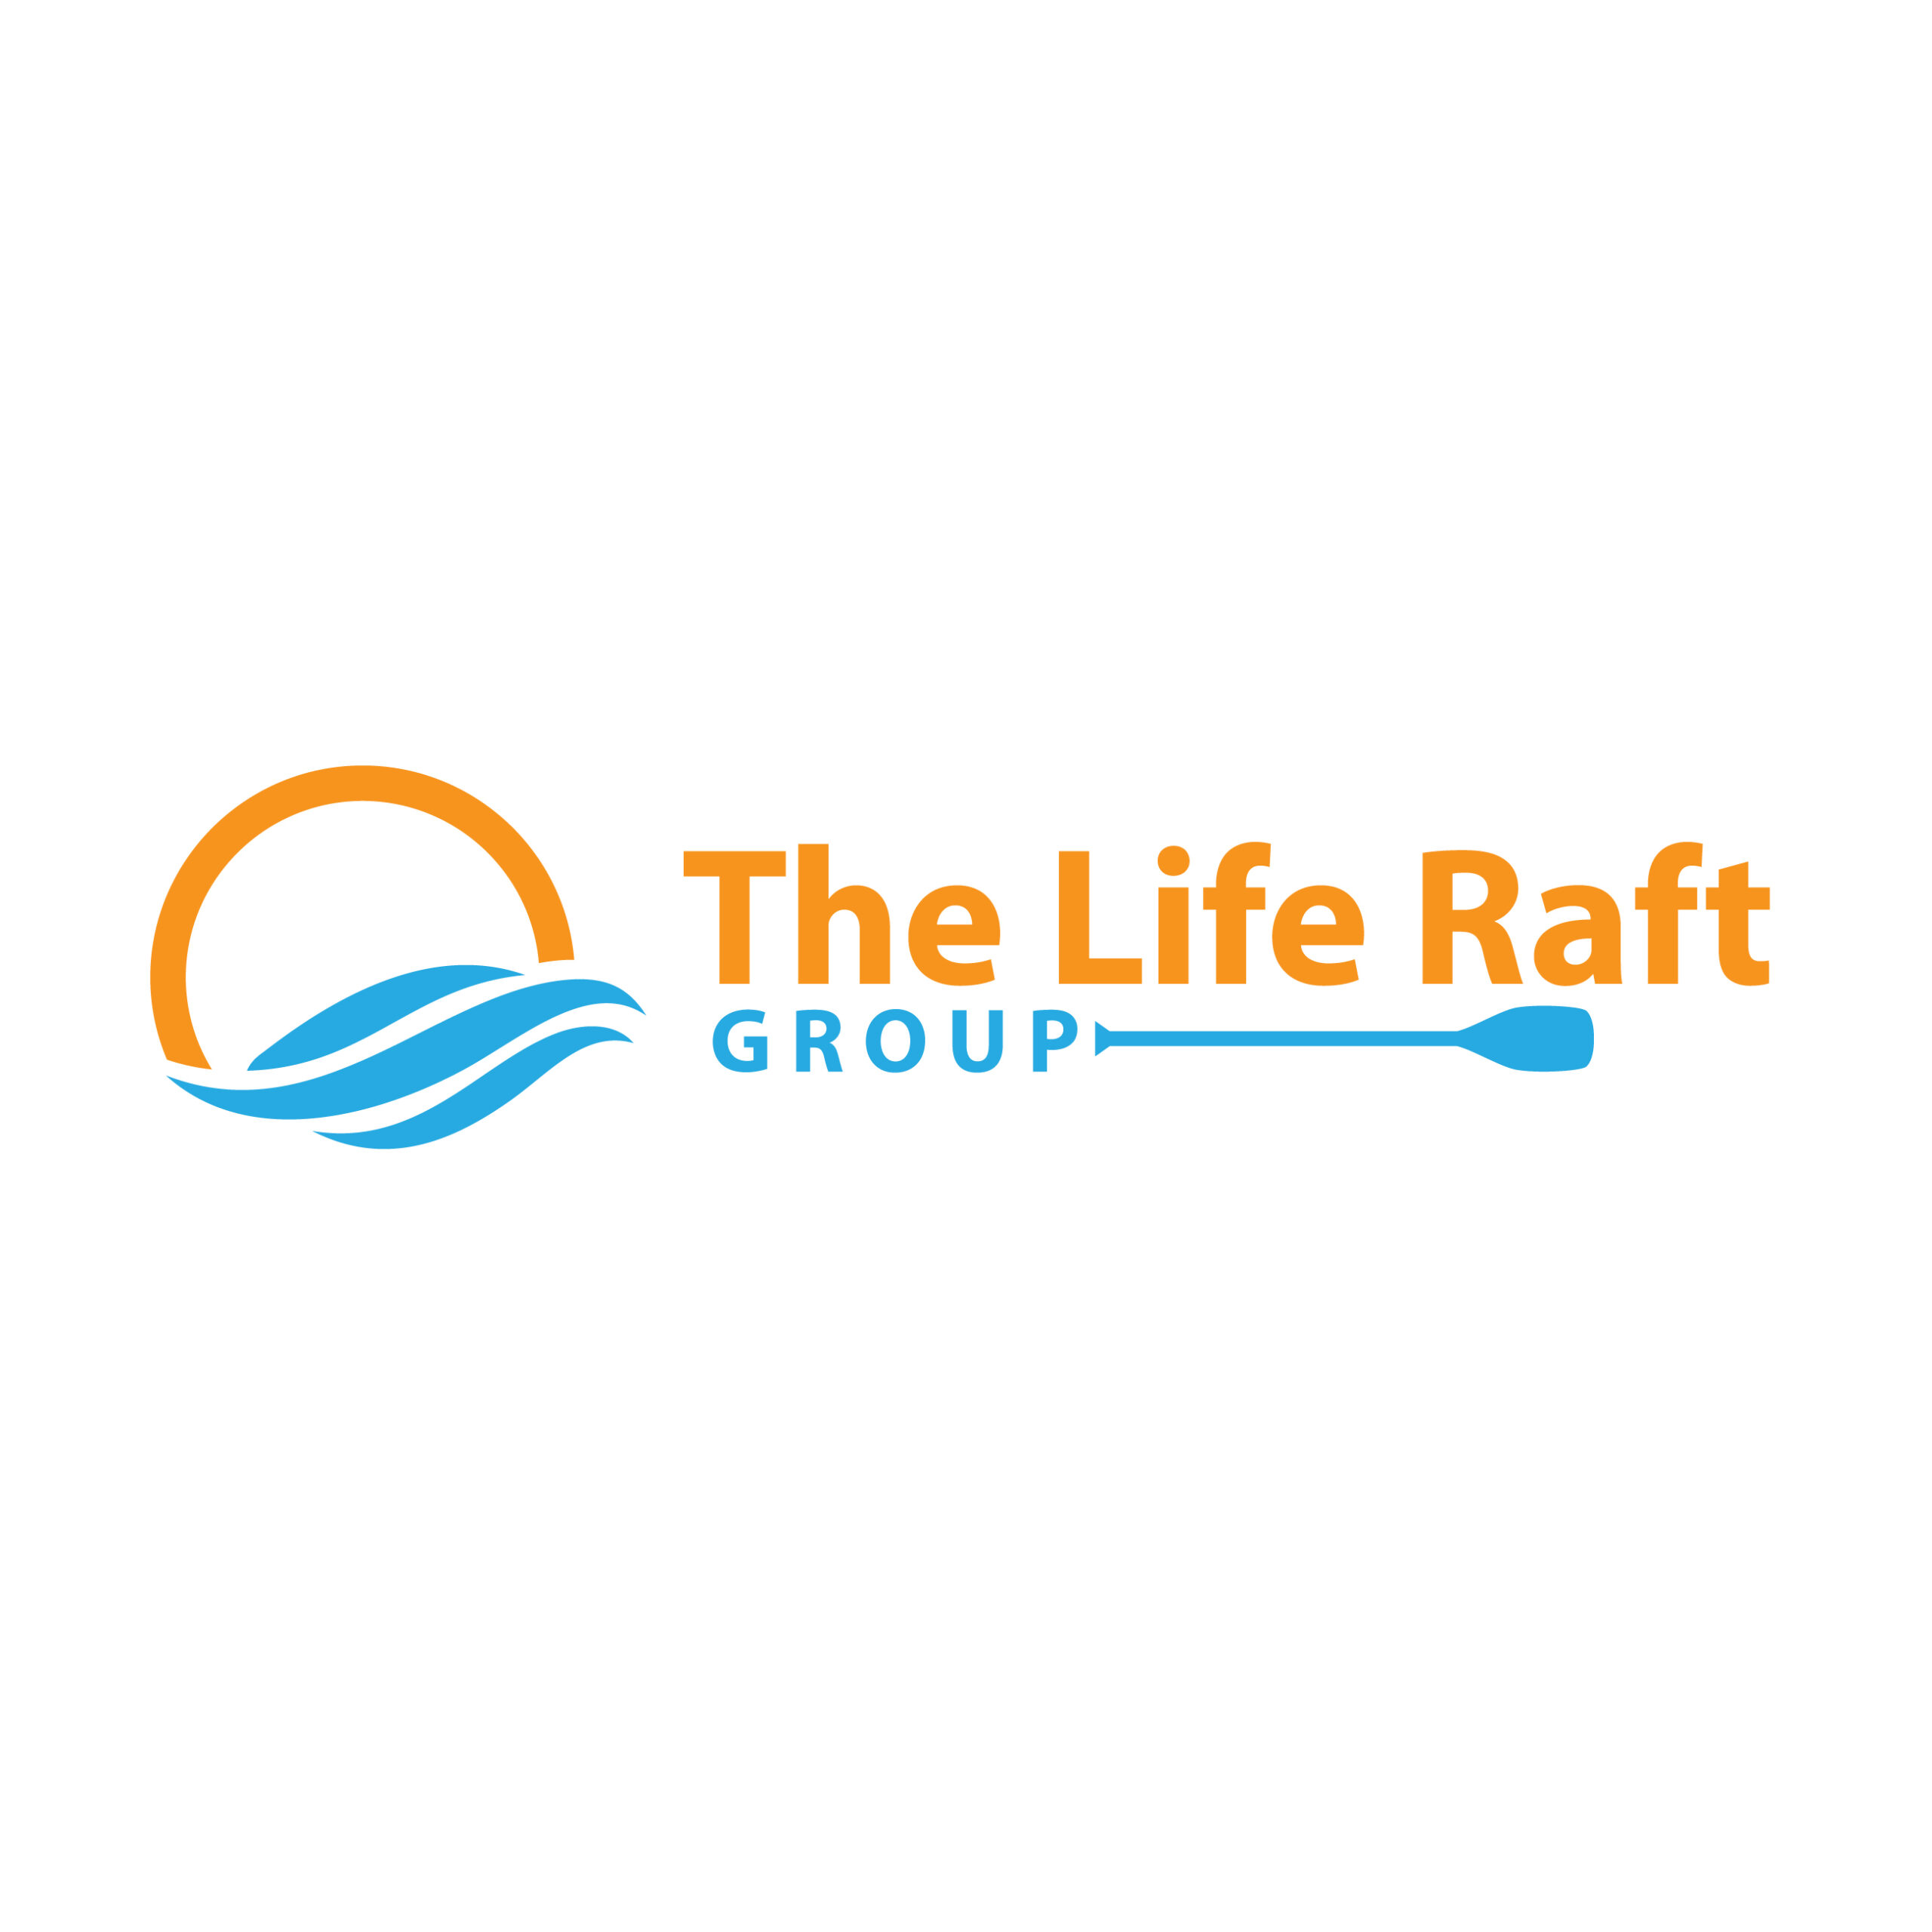 The life raft group logo